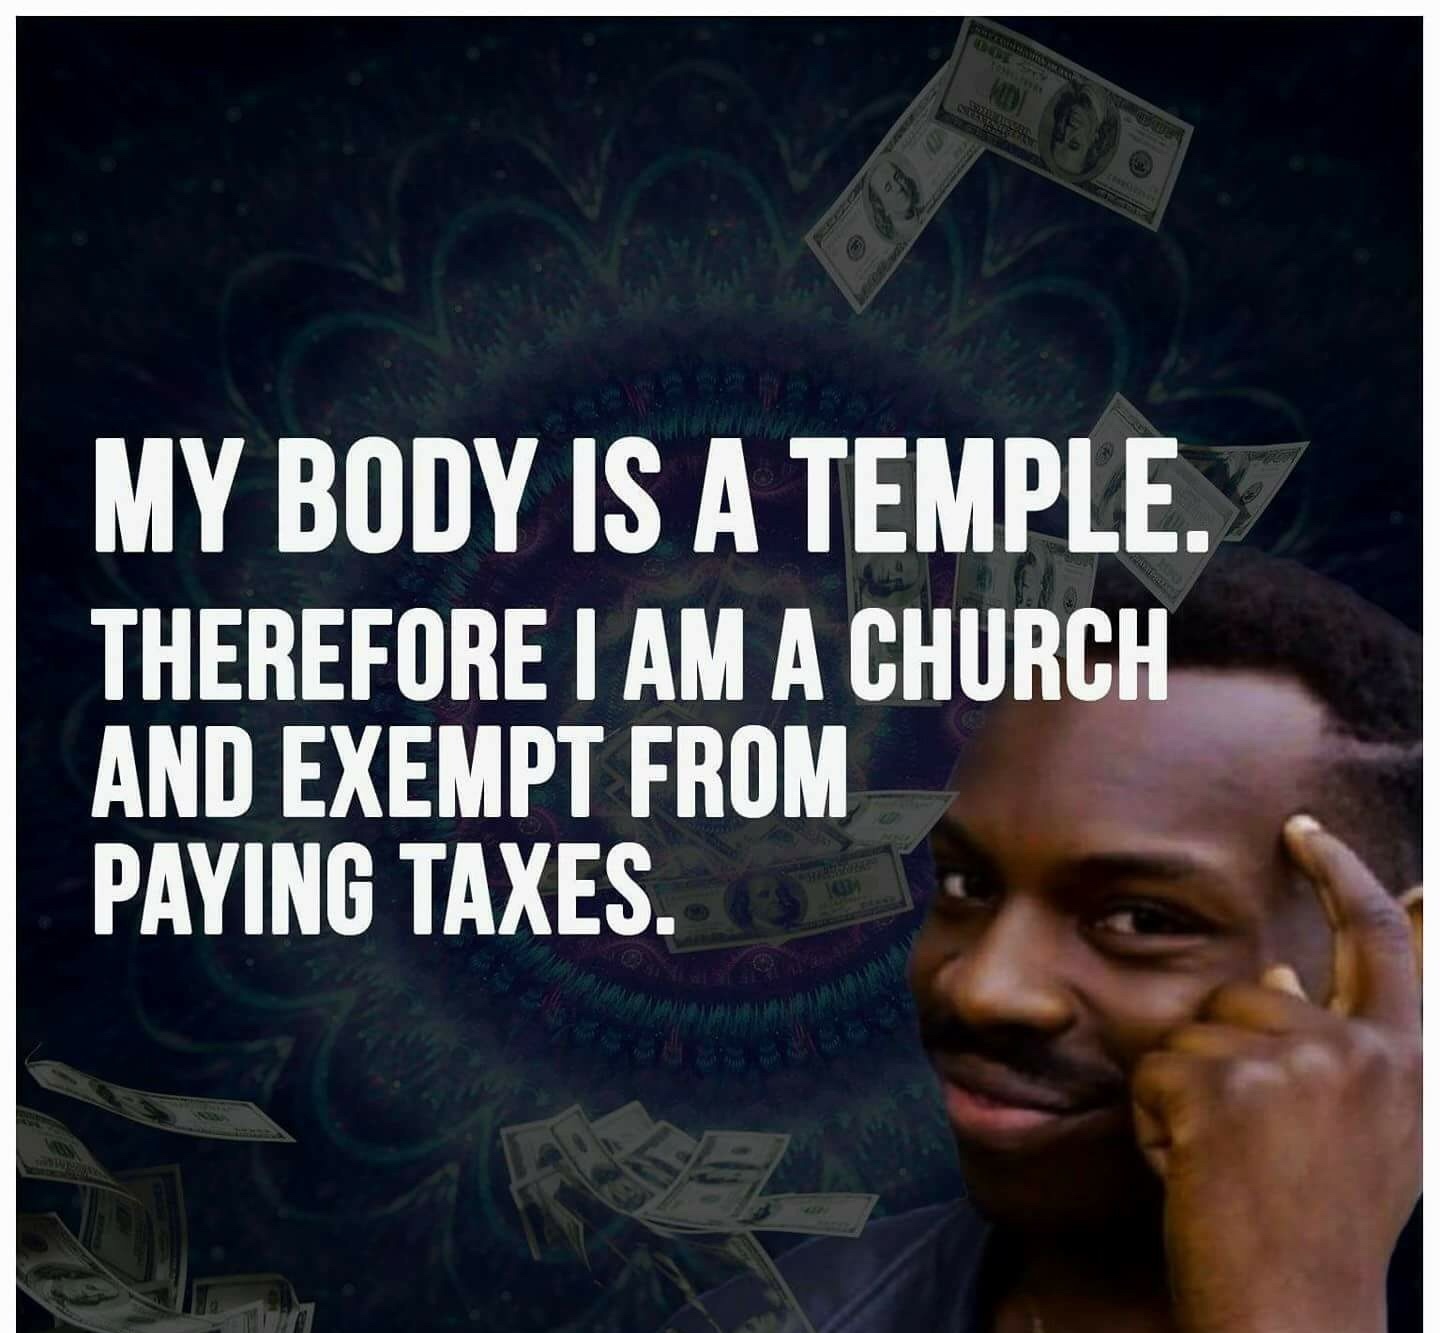 taxation is theft - meme